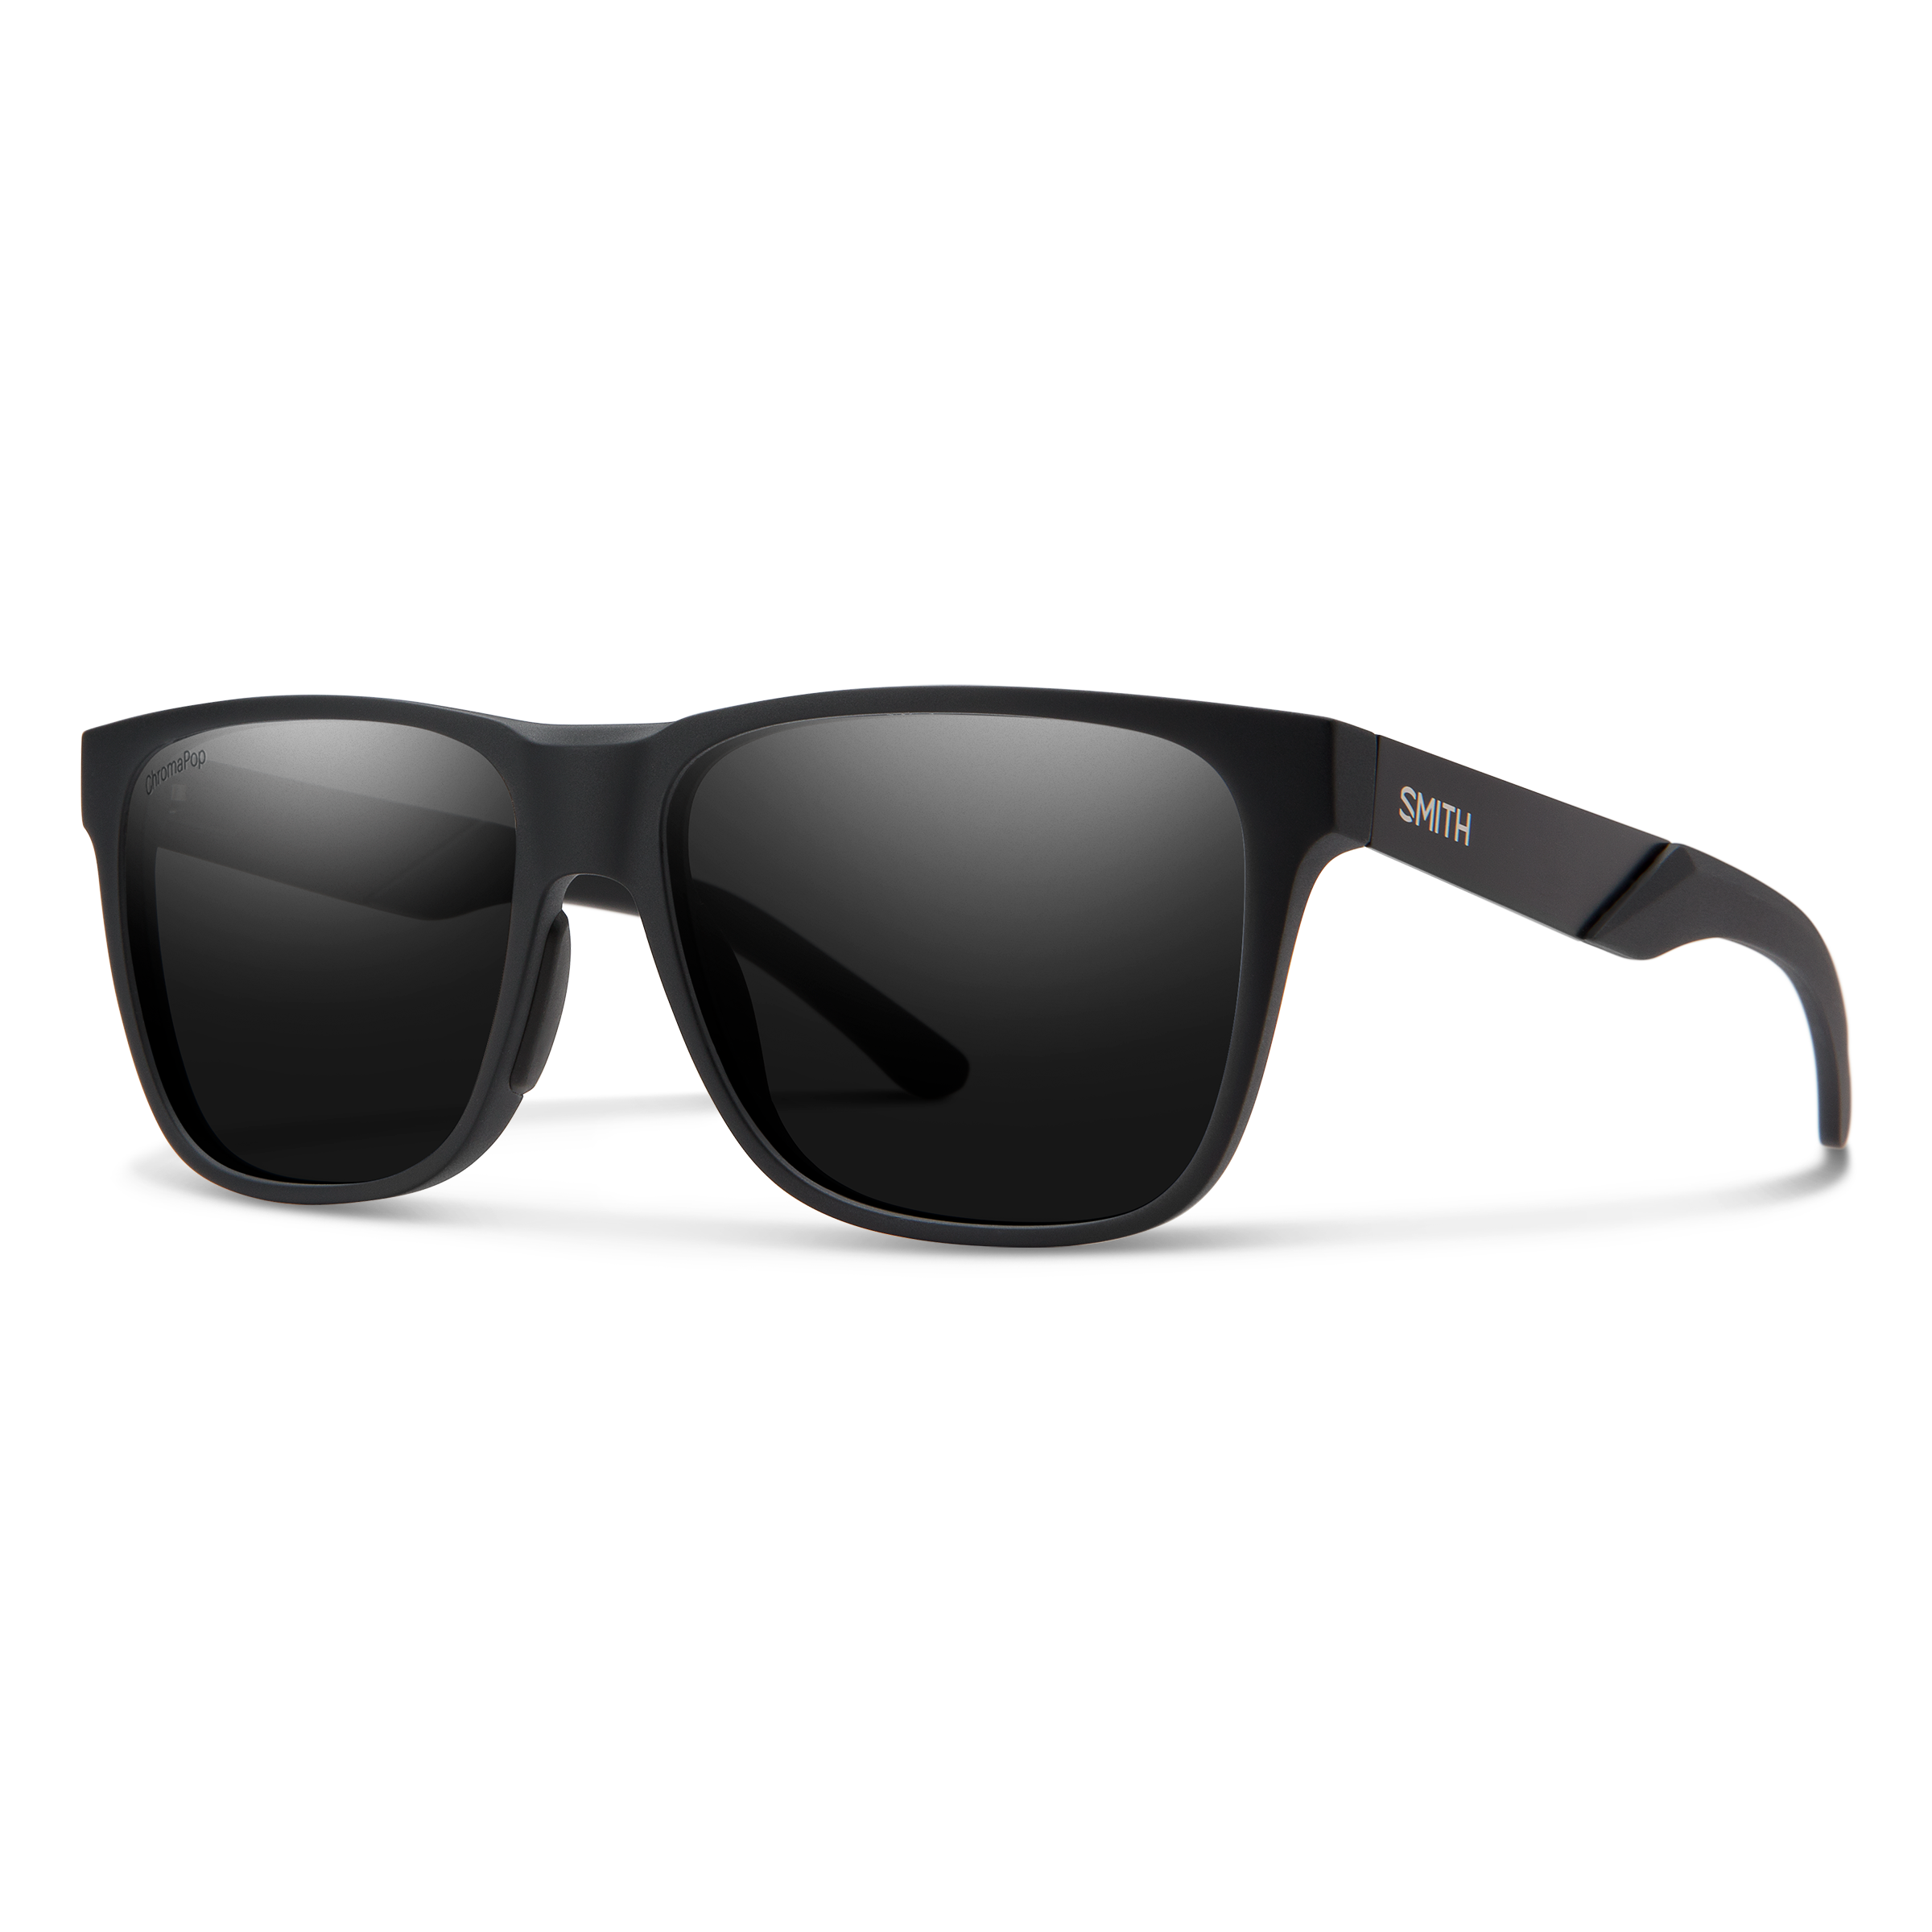 LIFETIME Warranty 2019 SMITH Optics Lowdown 2 Sunglasses ChromaPop Lens 